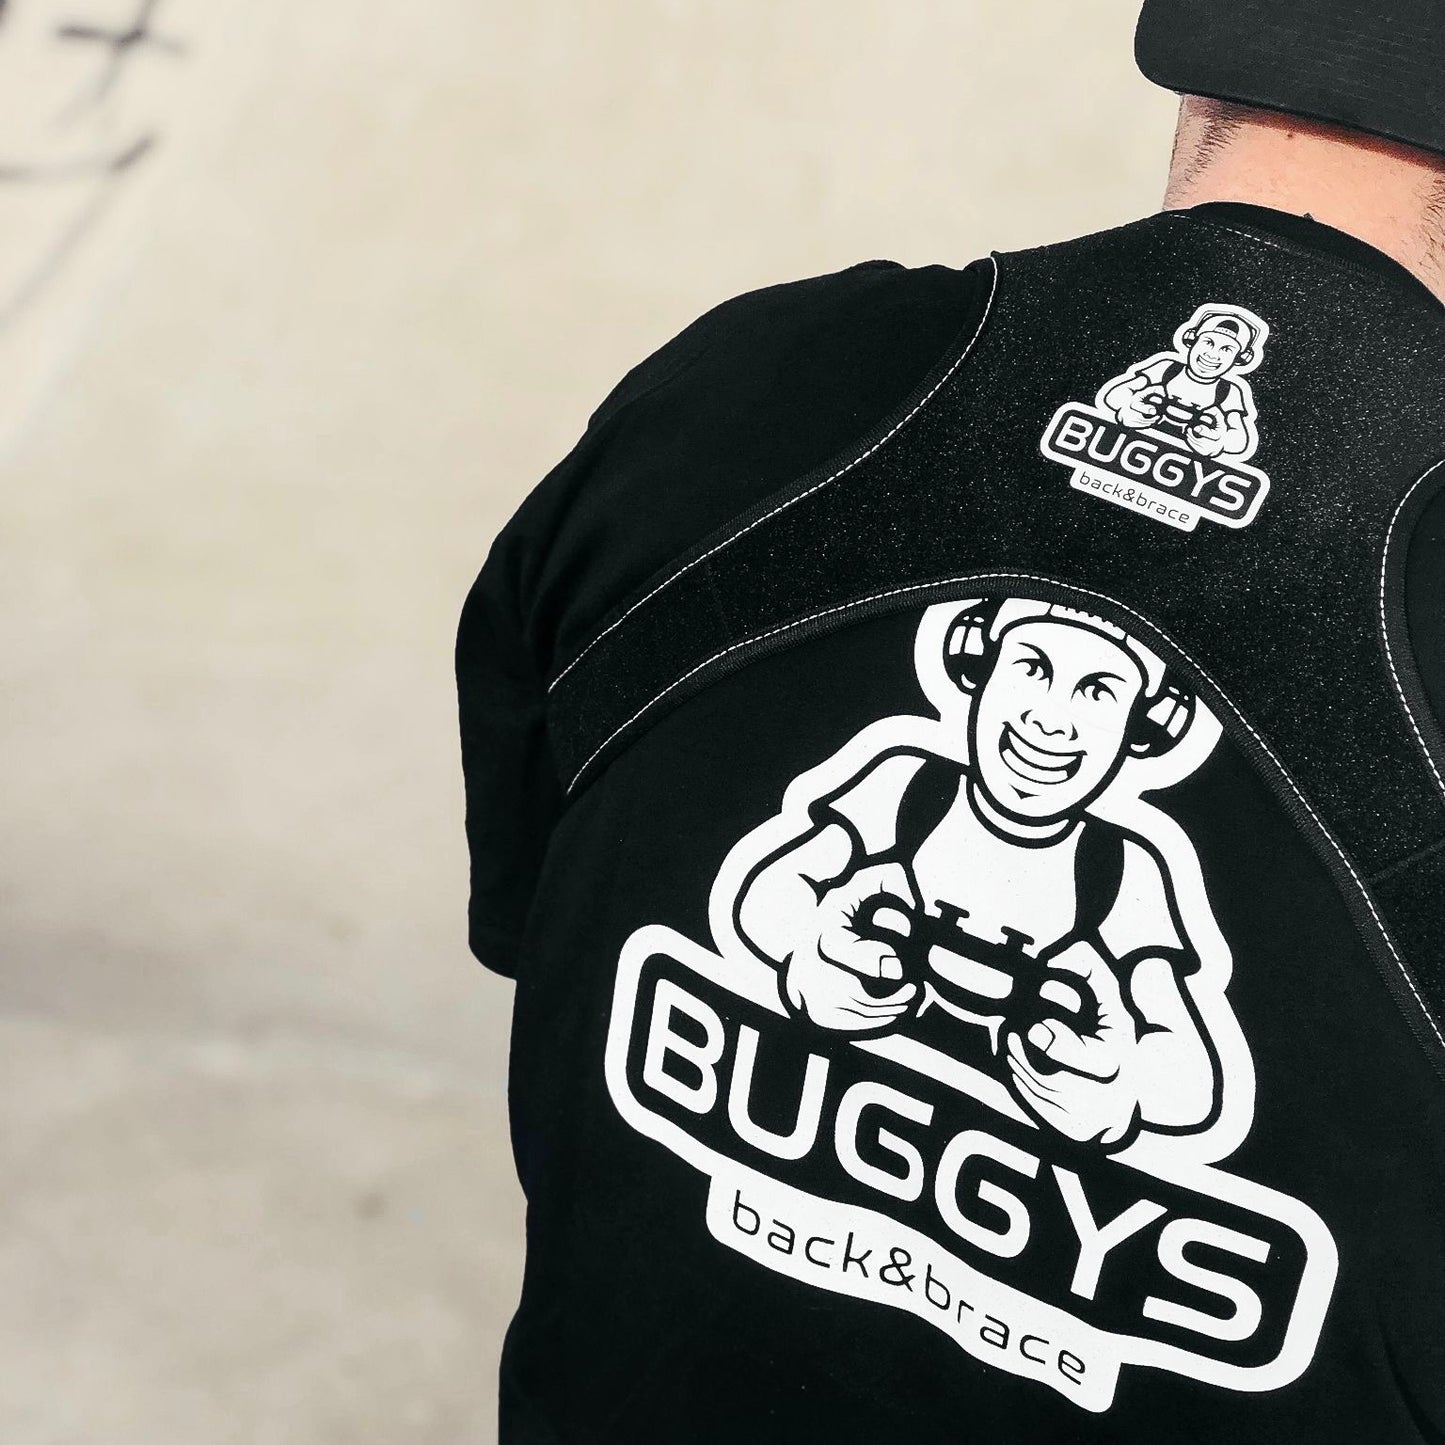 The Original: Buggys Competition Gamer Back Brace